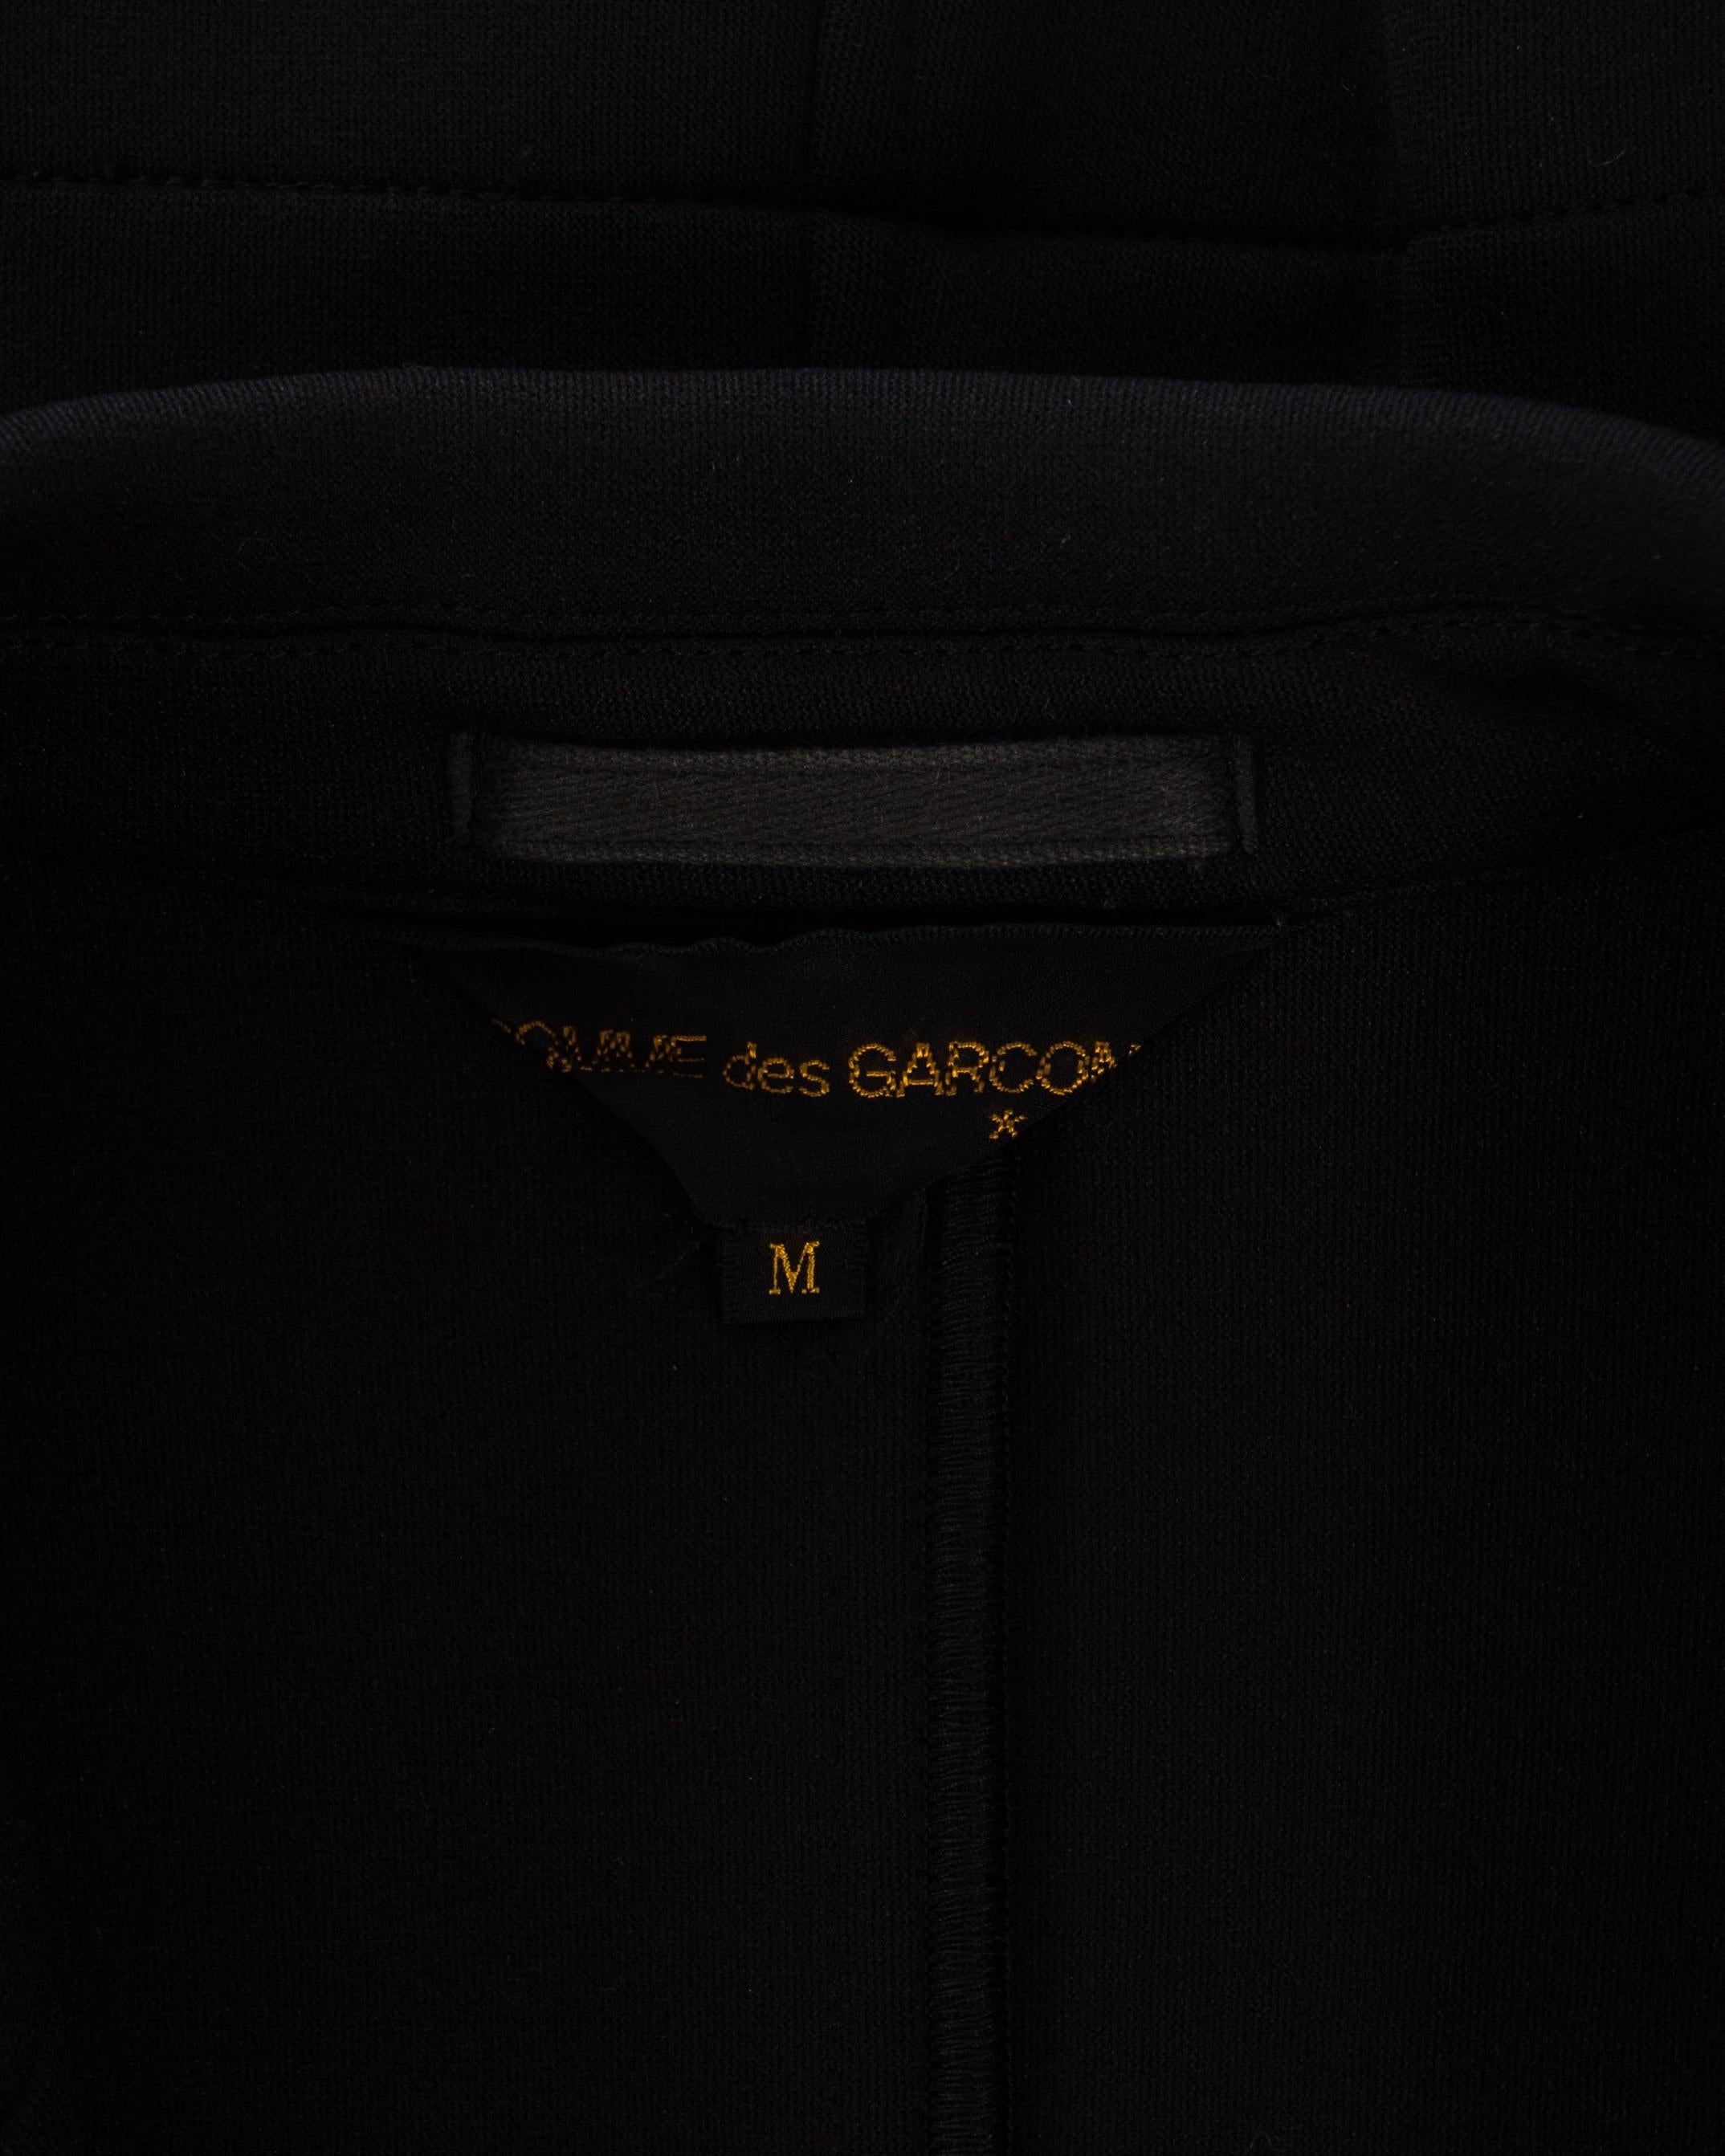 Comme des Garcons black neoprene jacket with satin brocade appliqué, fw 1990 For Sale 3